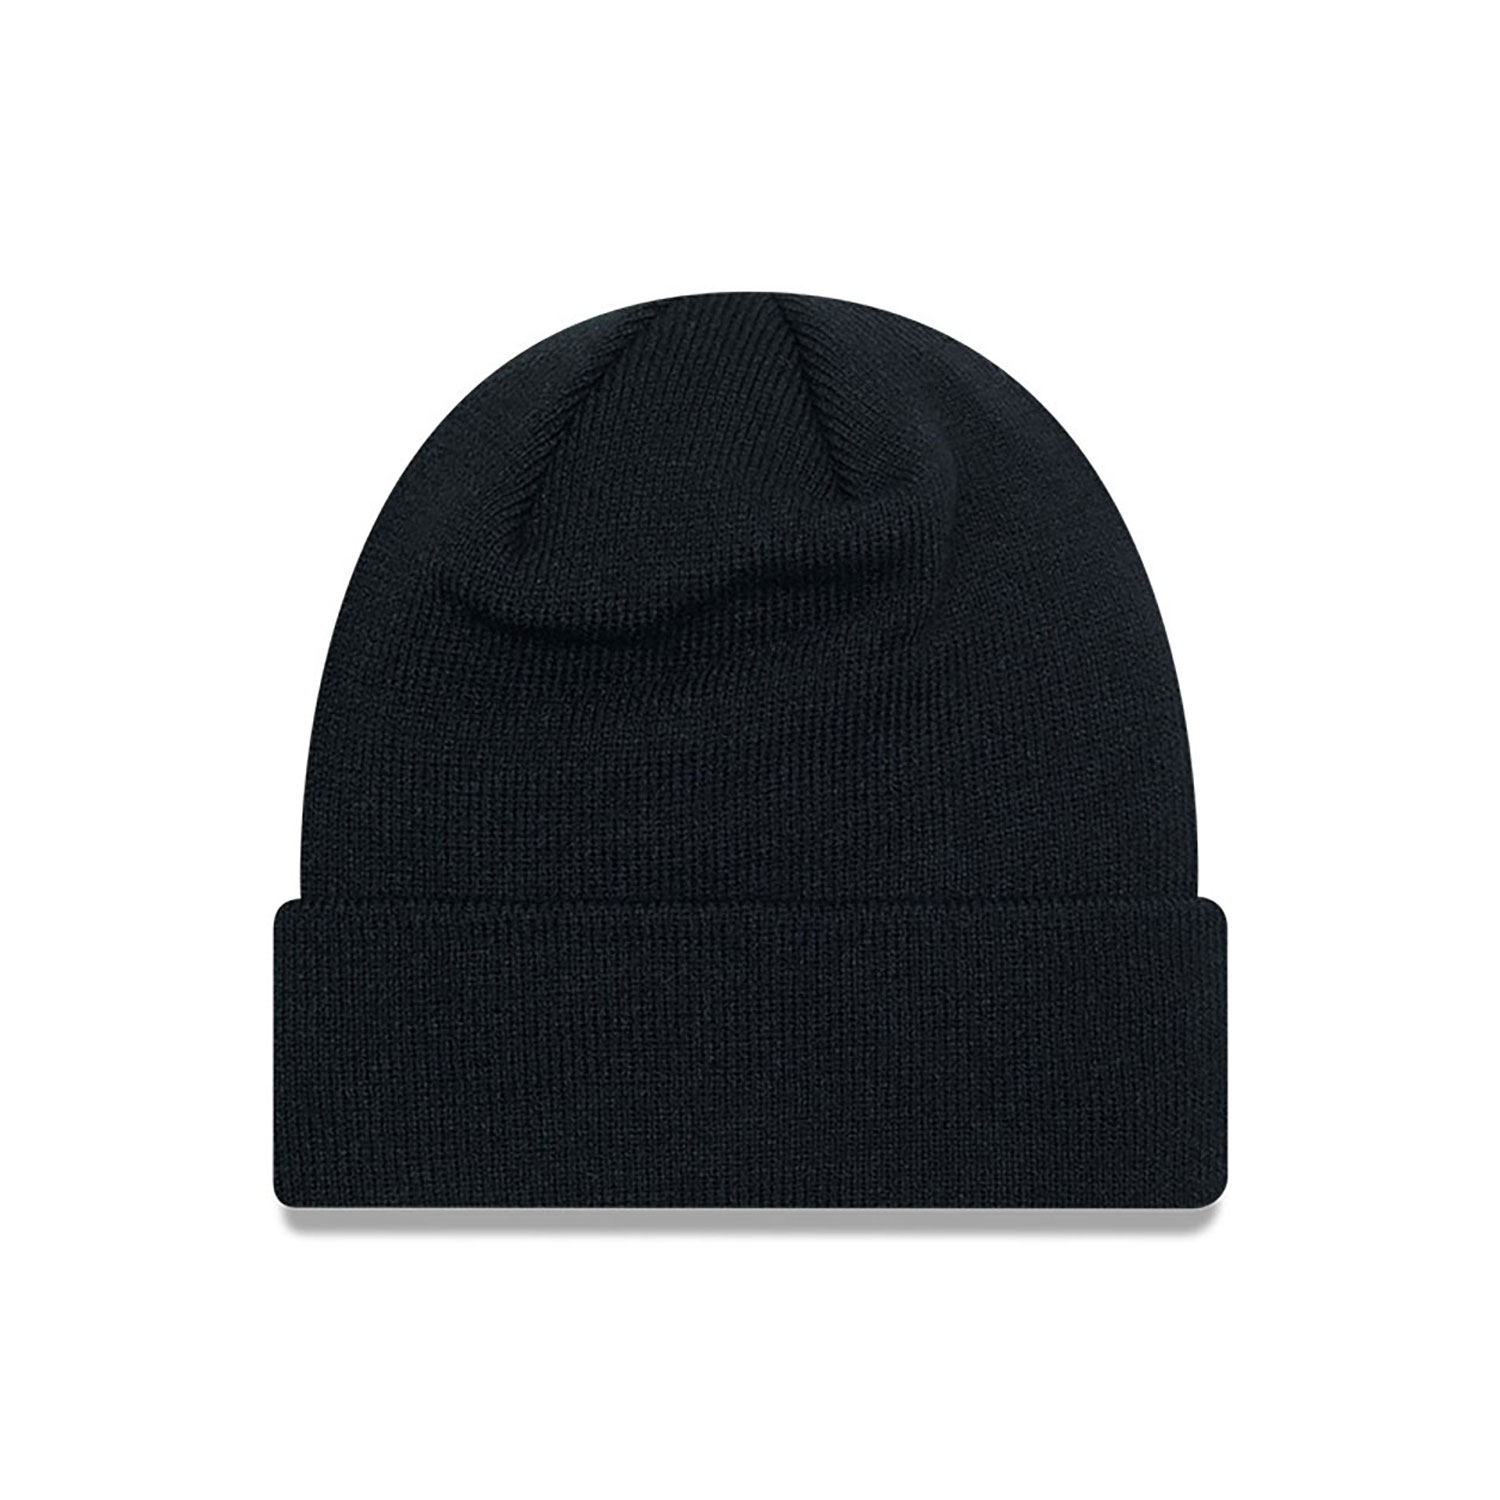 Manchester United FC Black Cuff Knit Beanie Hat